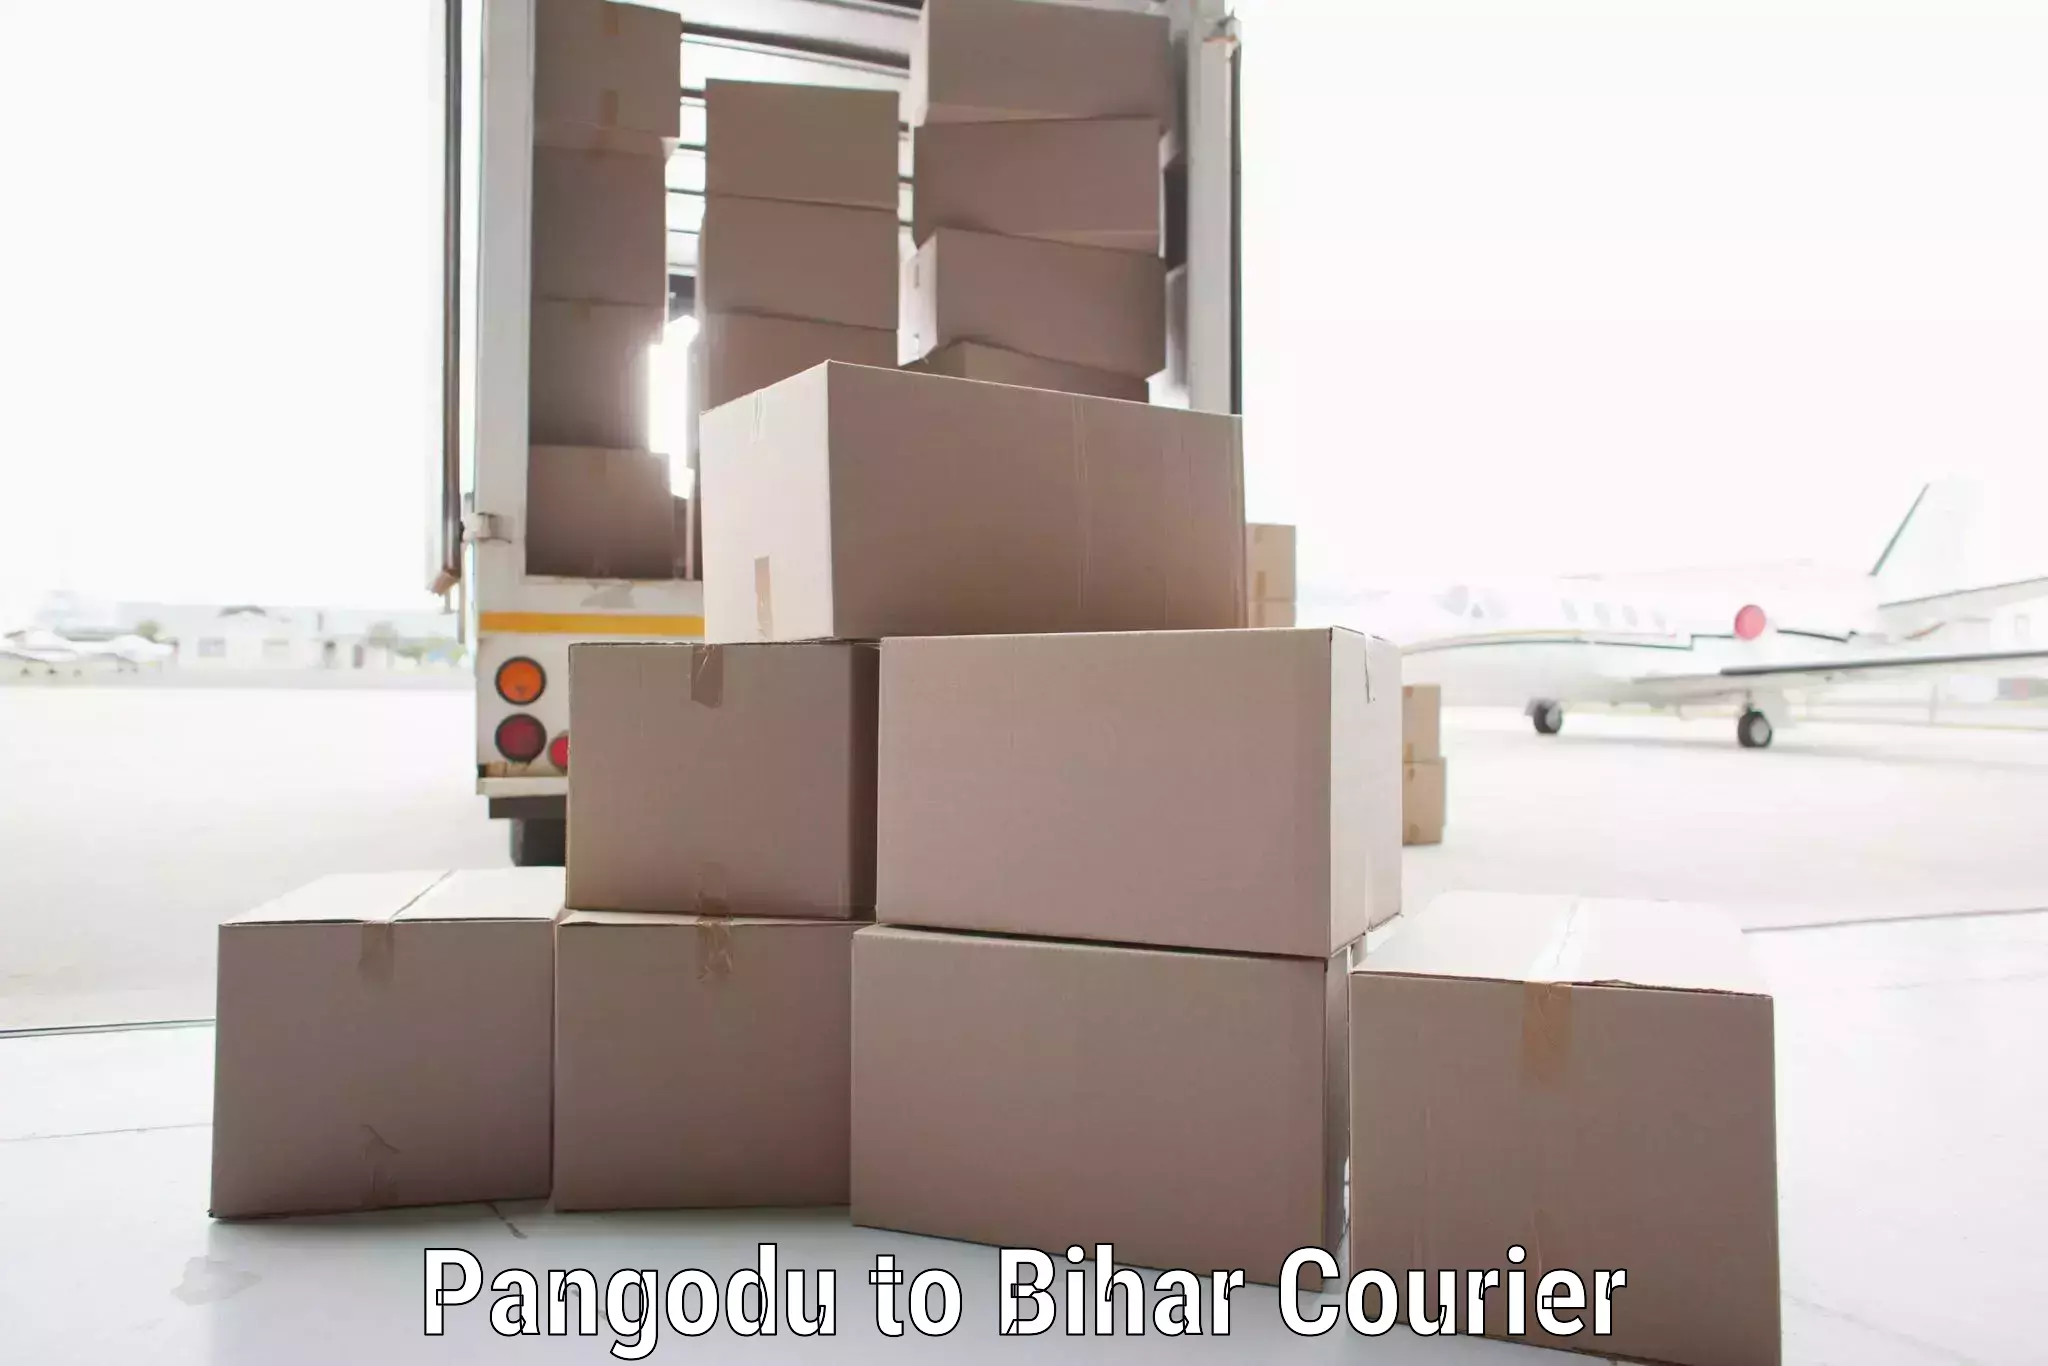 Express delivery capabilities Pangodu to Alamnagar